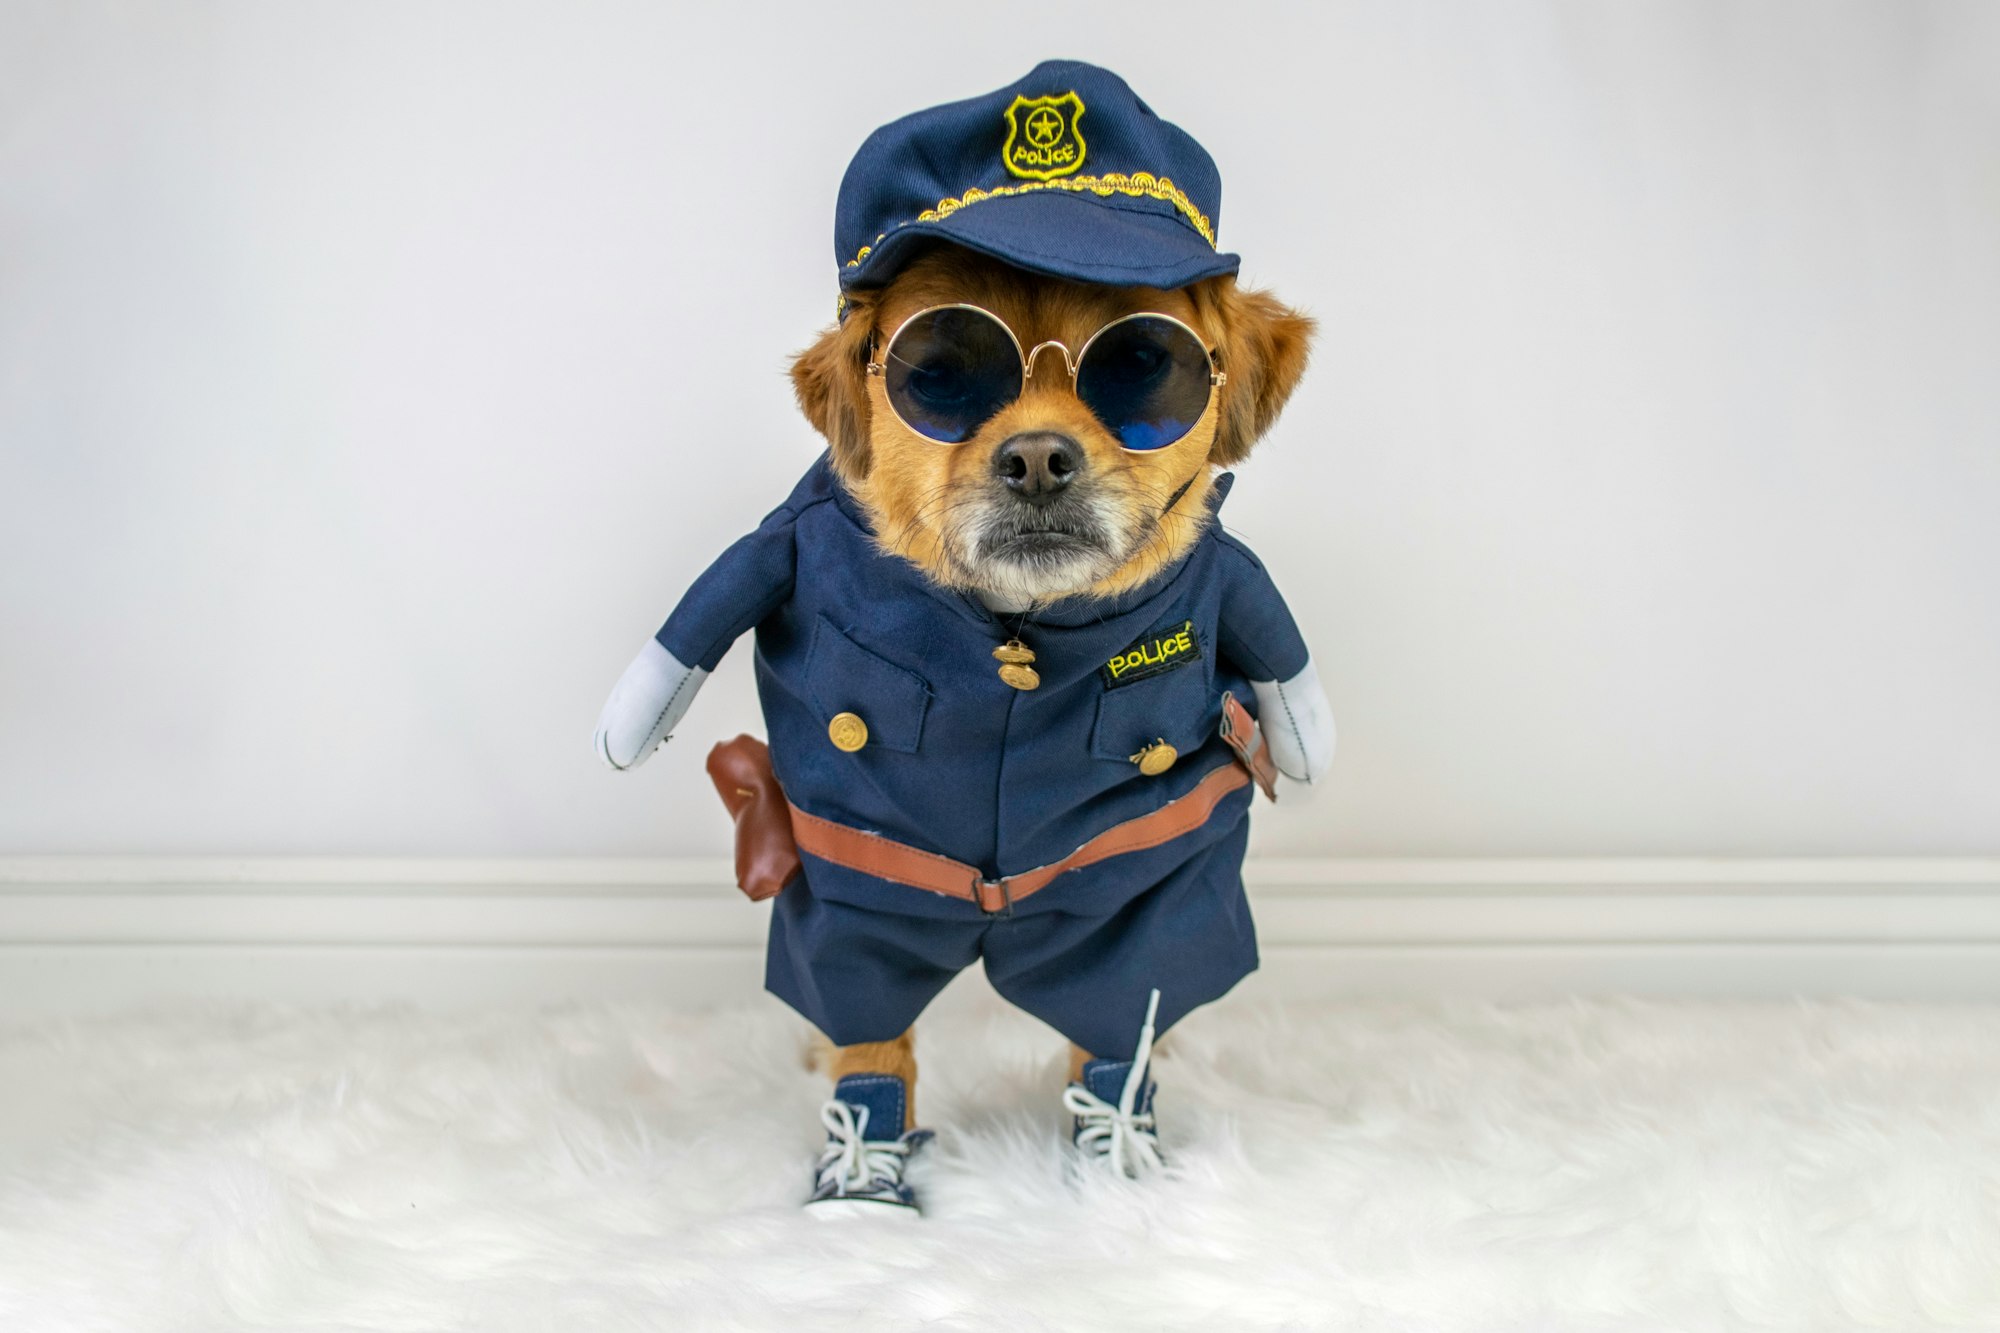 Cute dog wearing police costume